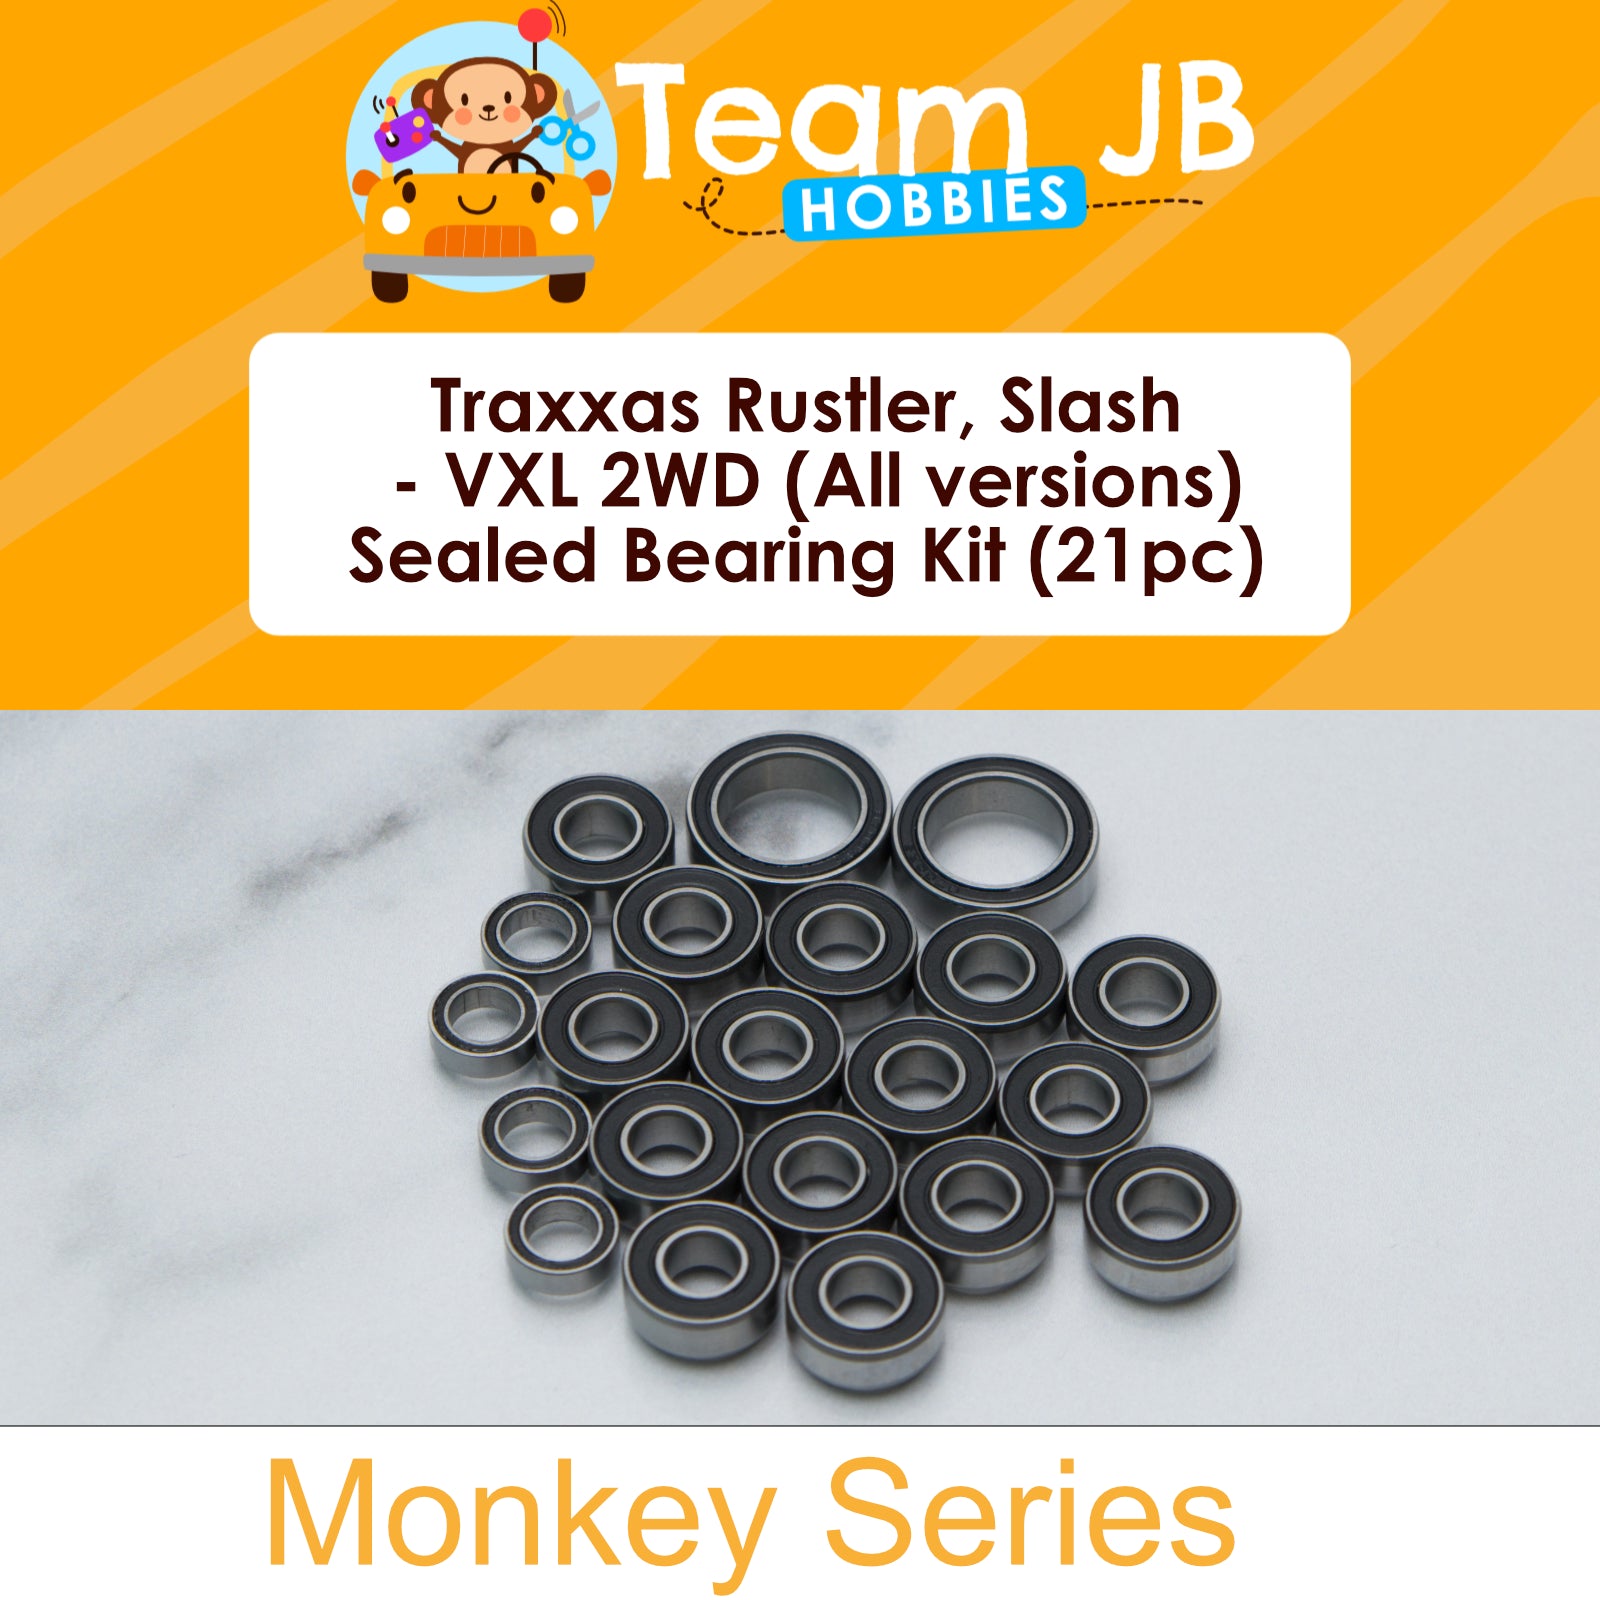 Traxxas Rustler, Slash - VXL 2WD (All versions) - Sealed Bearing Kit